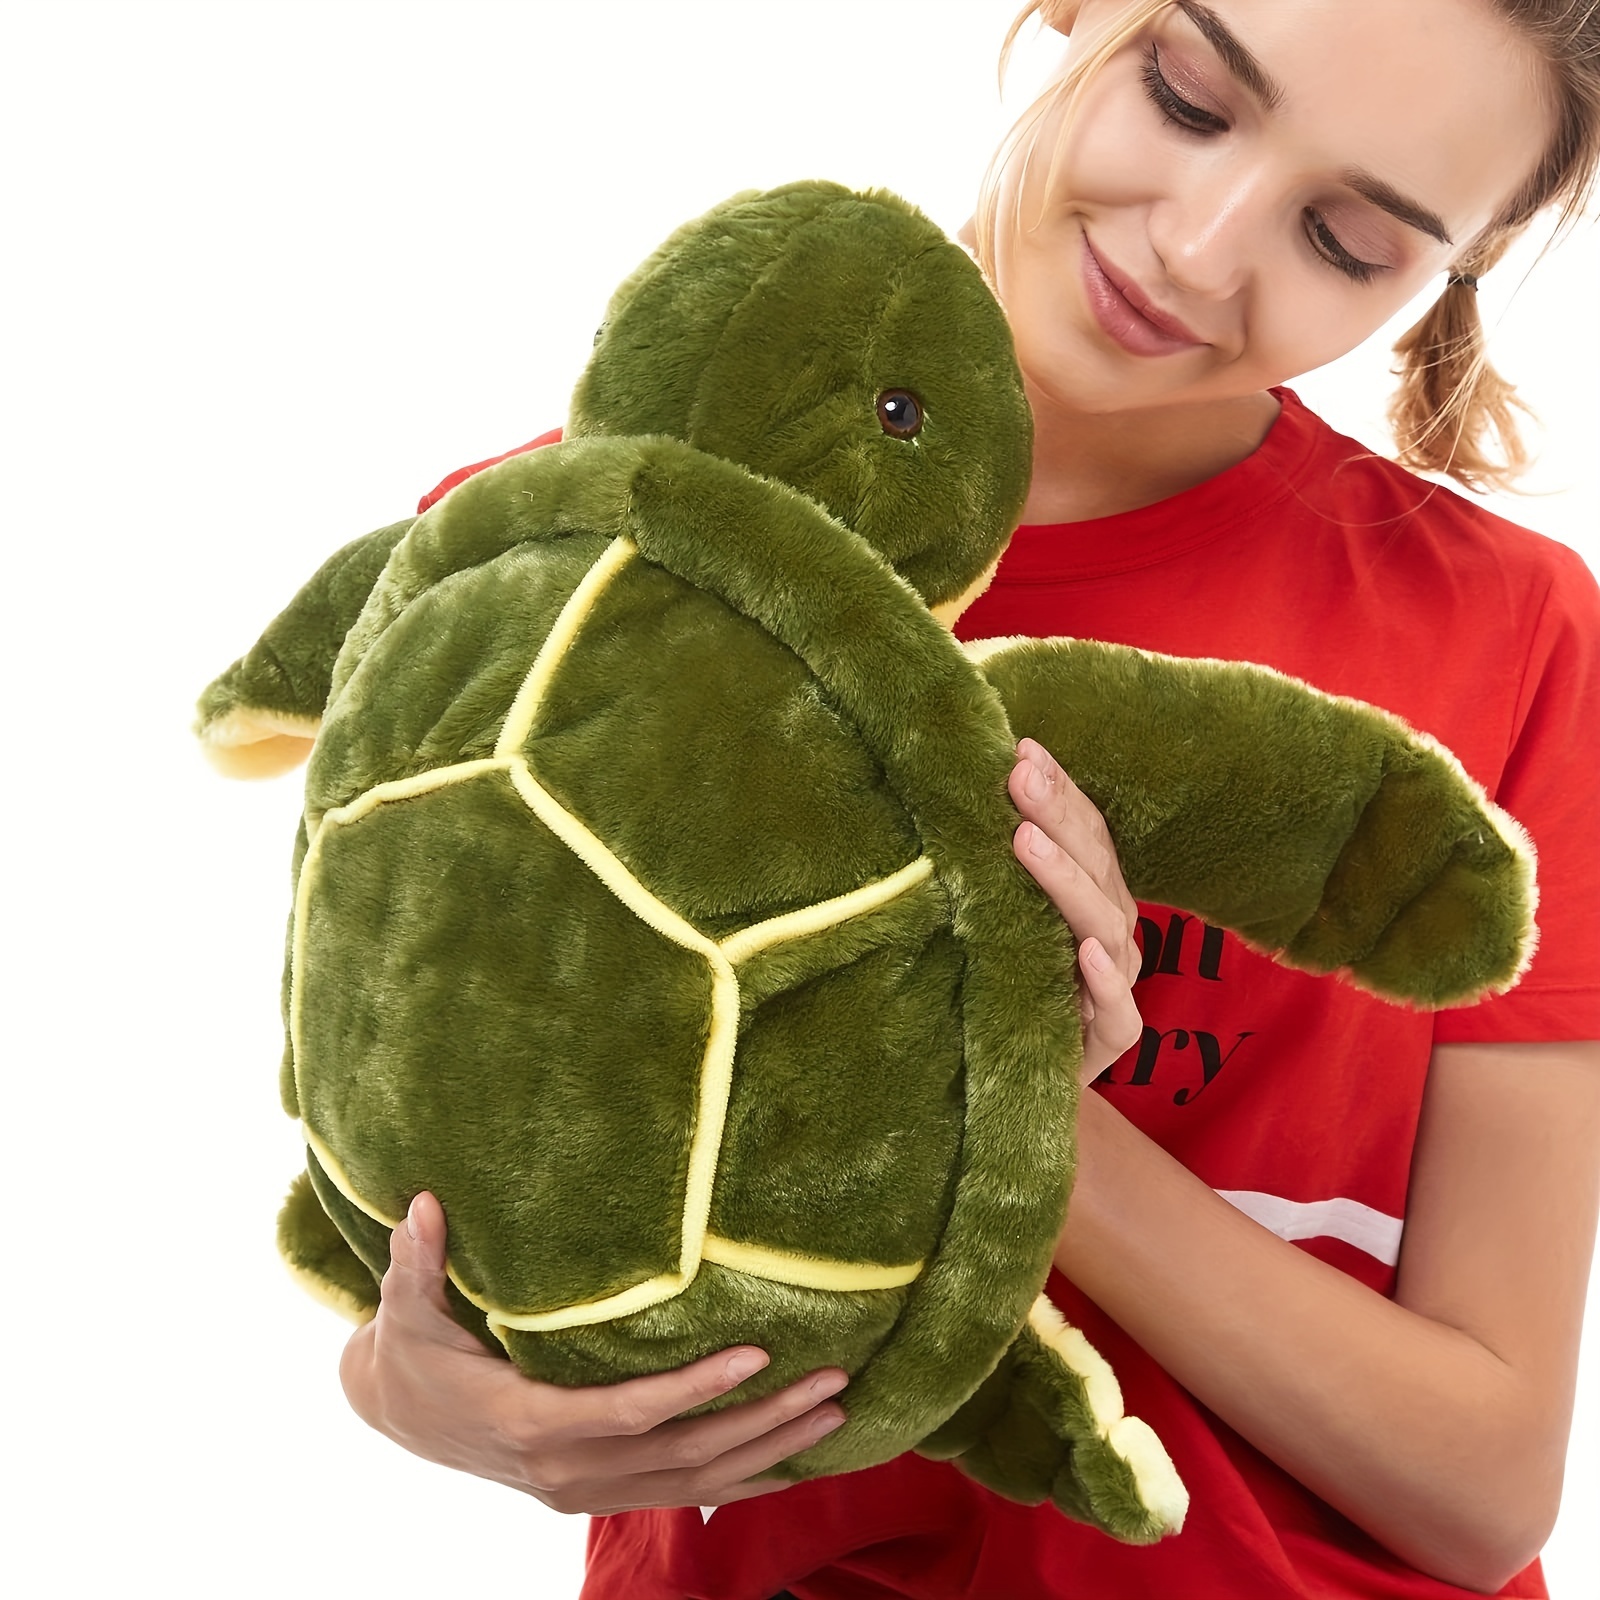 Peluche en forme de coquille de tortue rouge, jouet portable